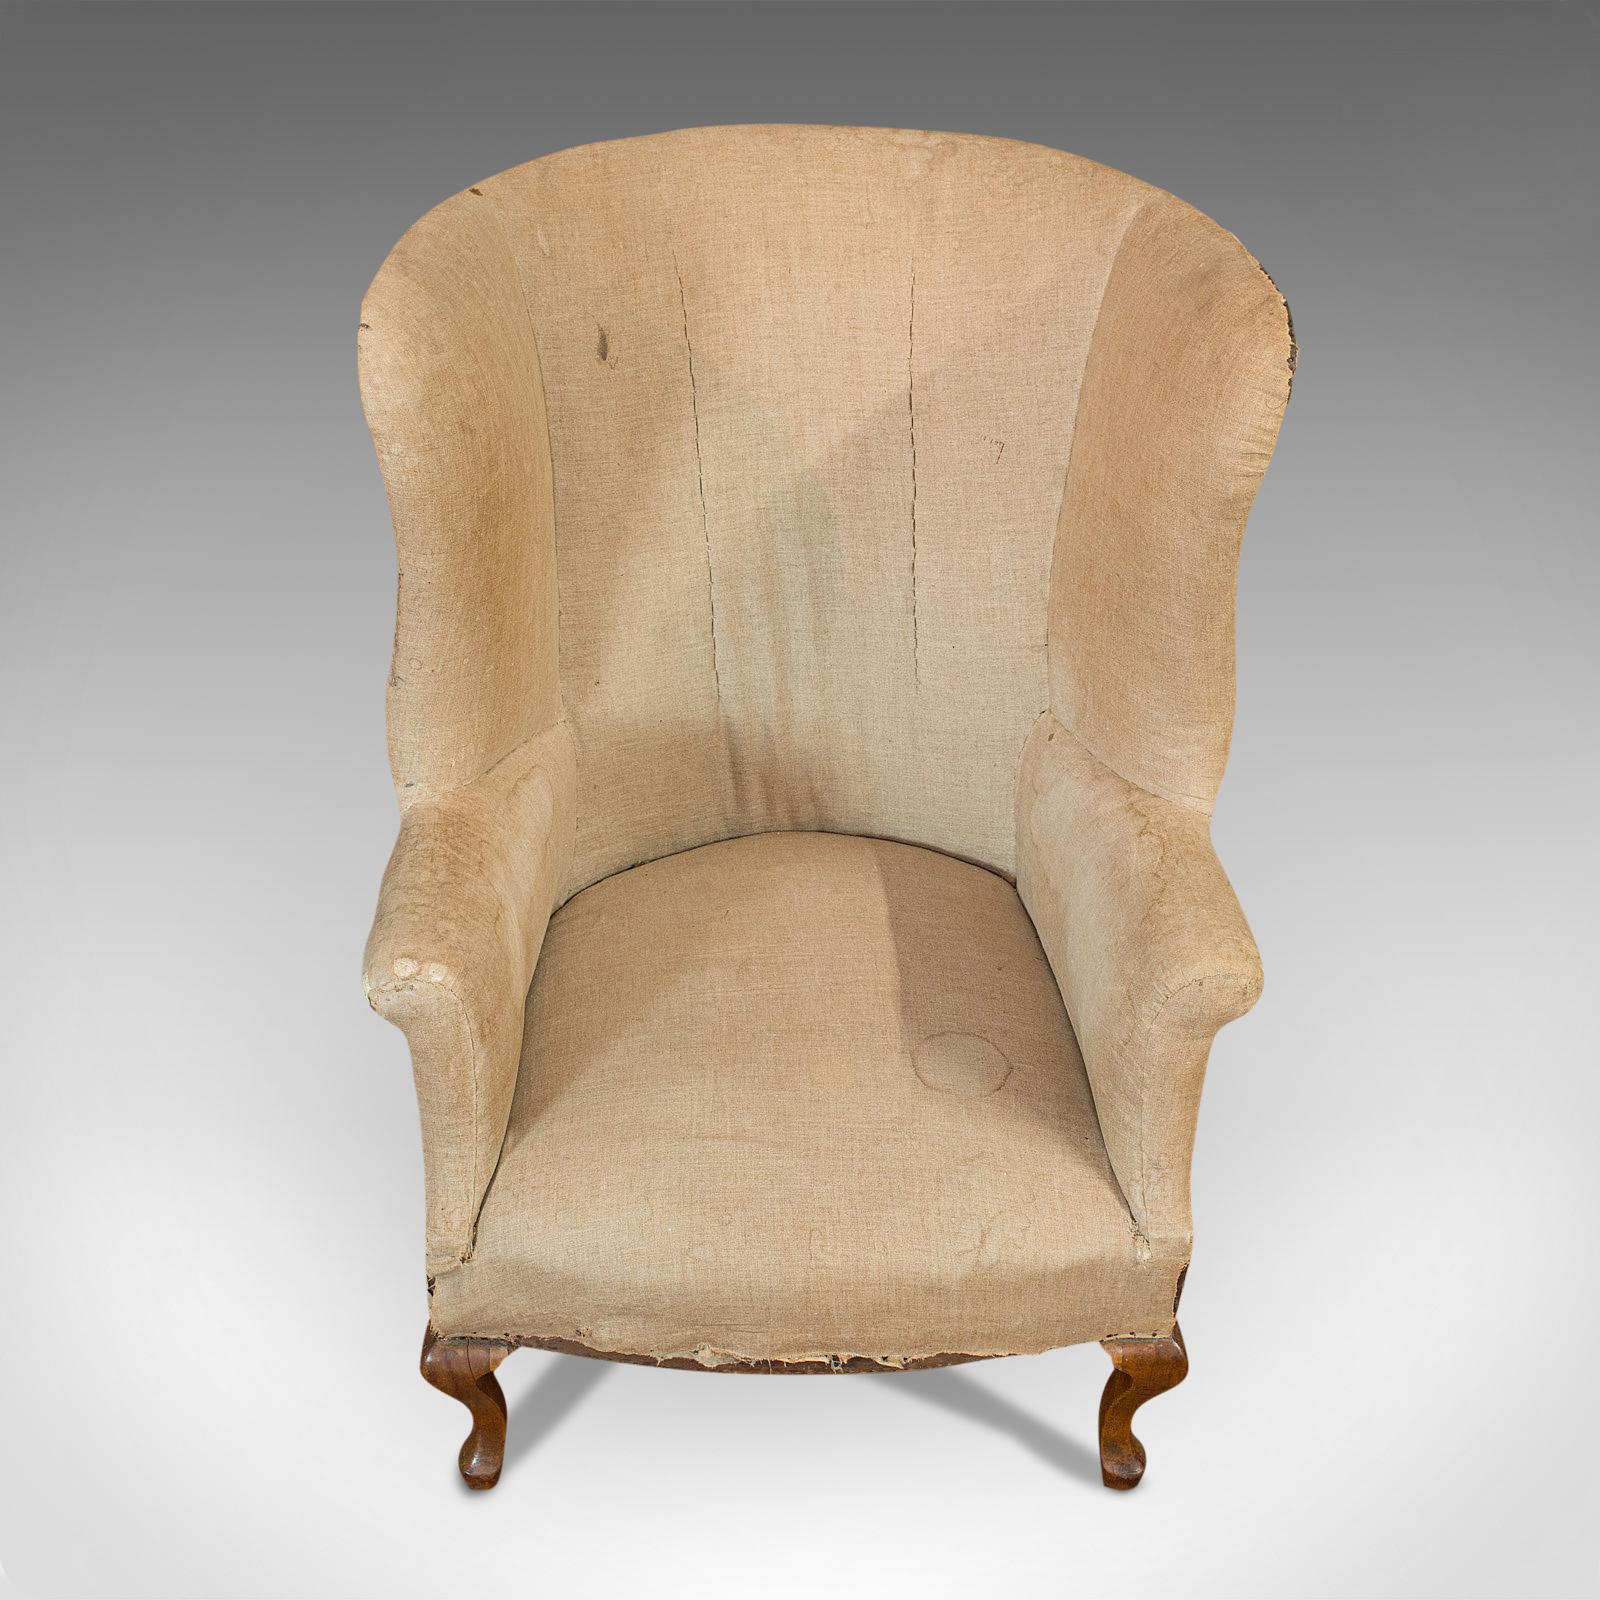 Antique Wing Armchair, English, Barrel-Back, Seat, Chair, Victorian, circa 1900 1